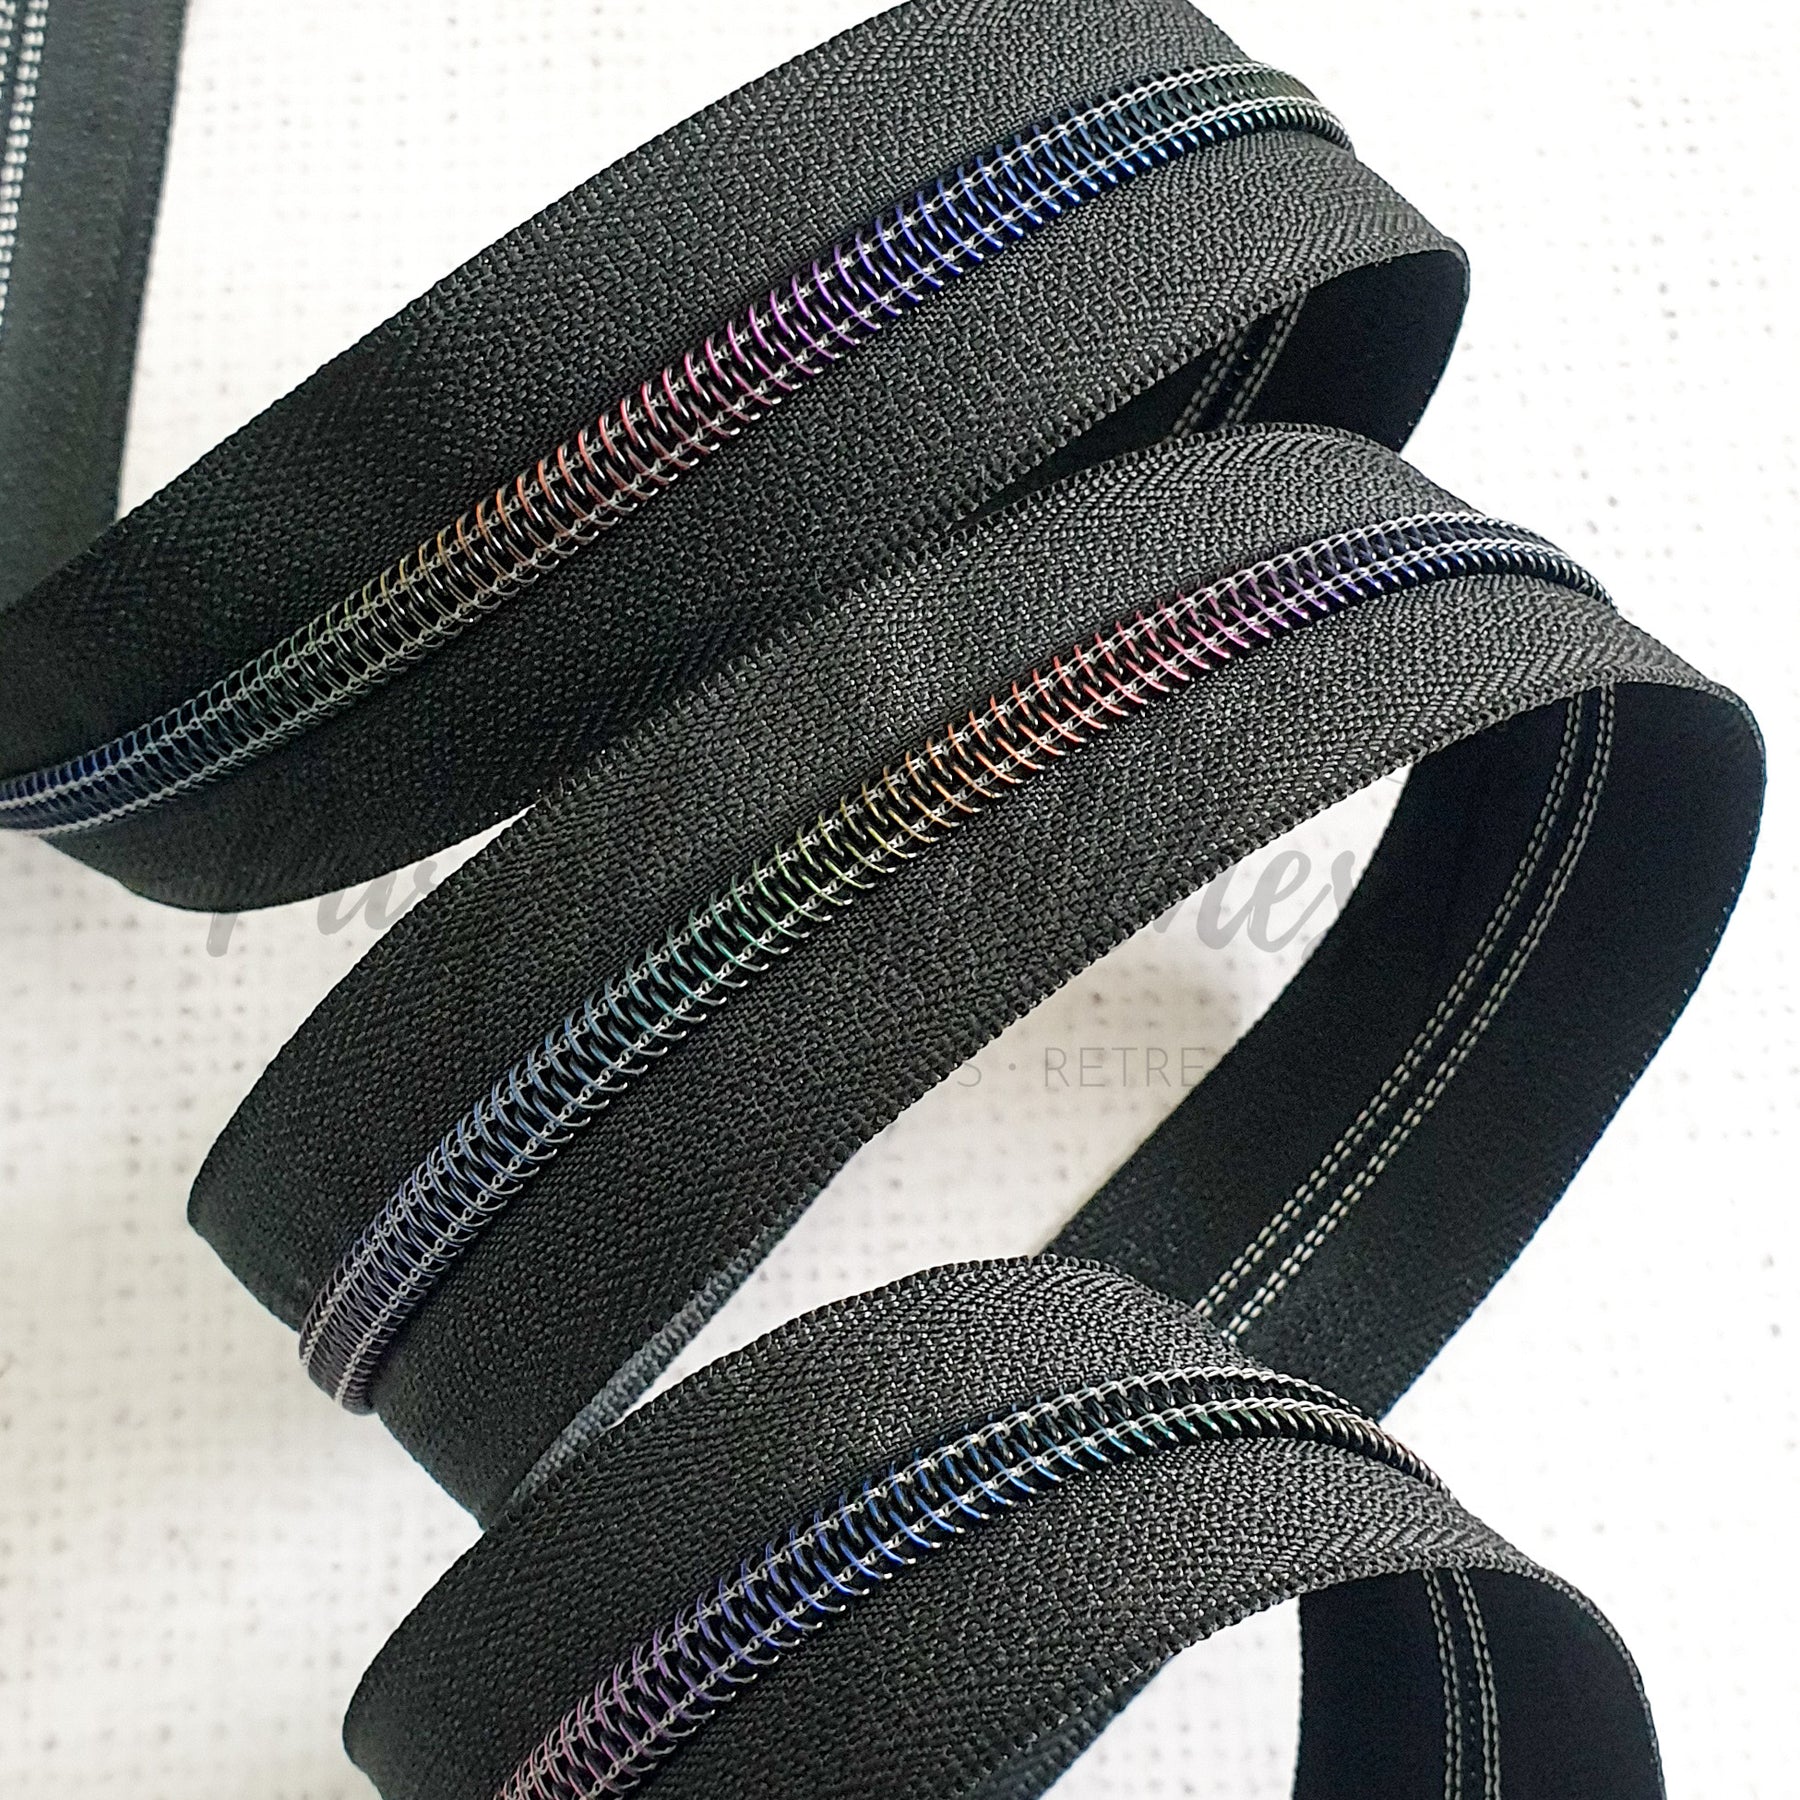 Over the Rainbow Black or White Size #5 Nylon Zipper Tape, Black Zipper Tape,  White Zipper, Rainbow Zipper, #5 Zipper Tape, Sew Majestic